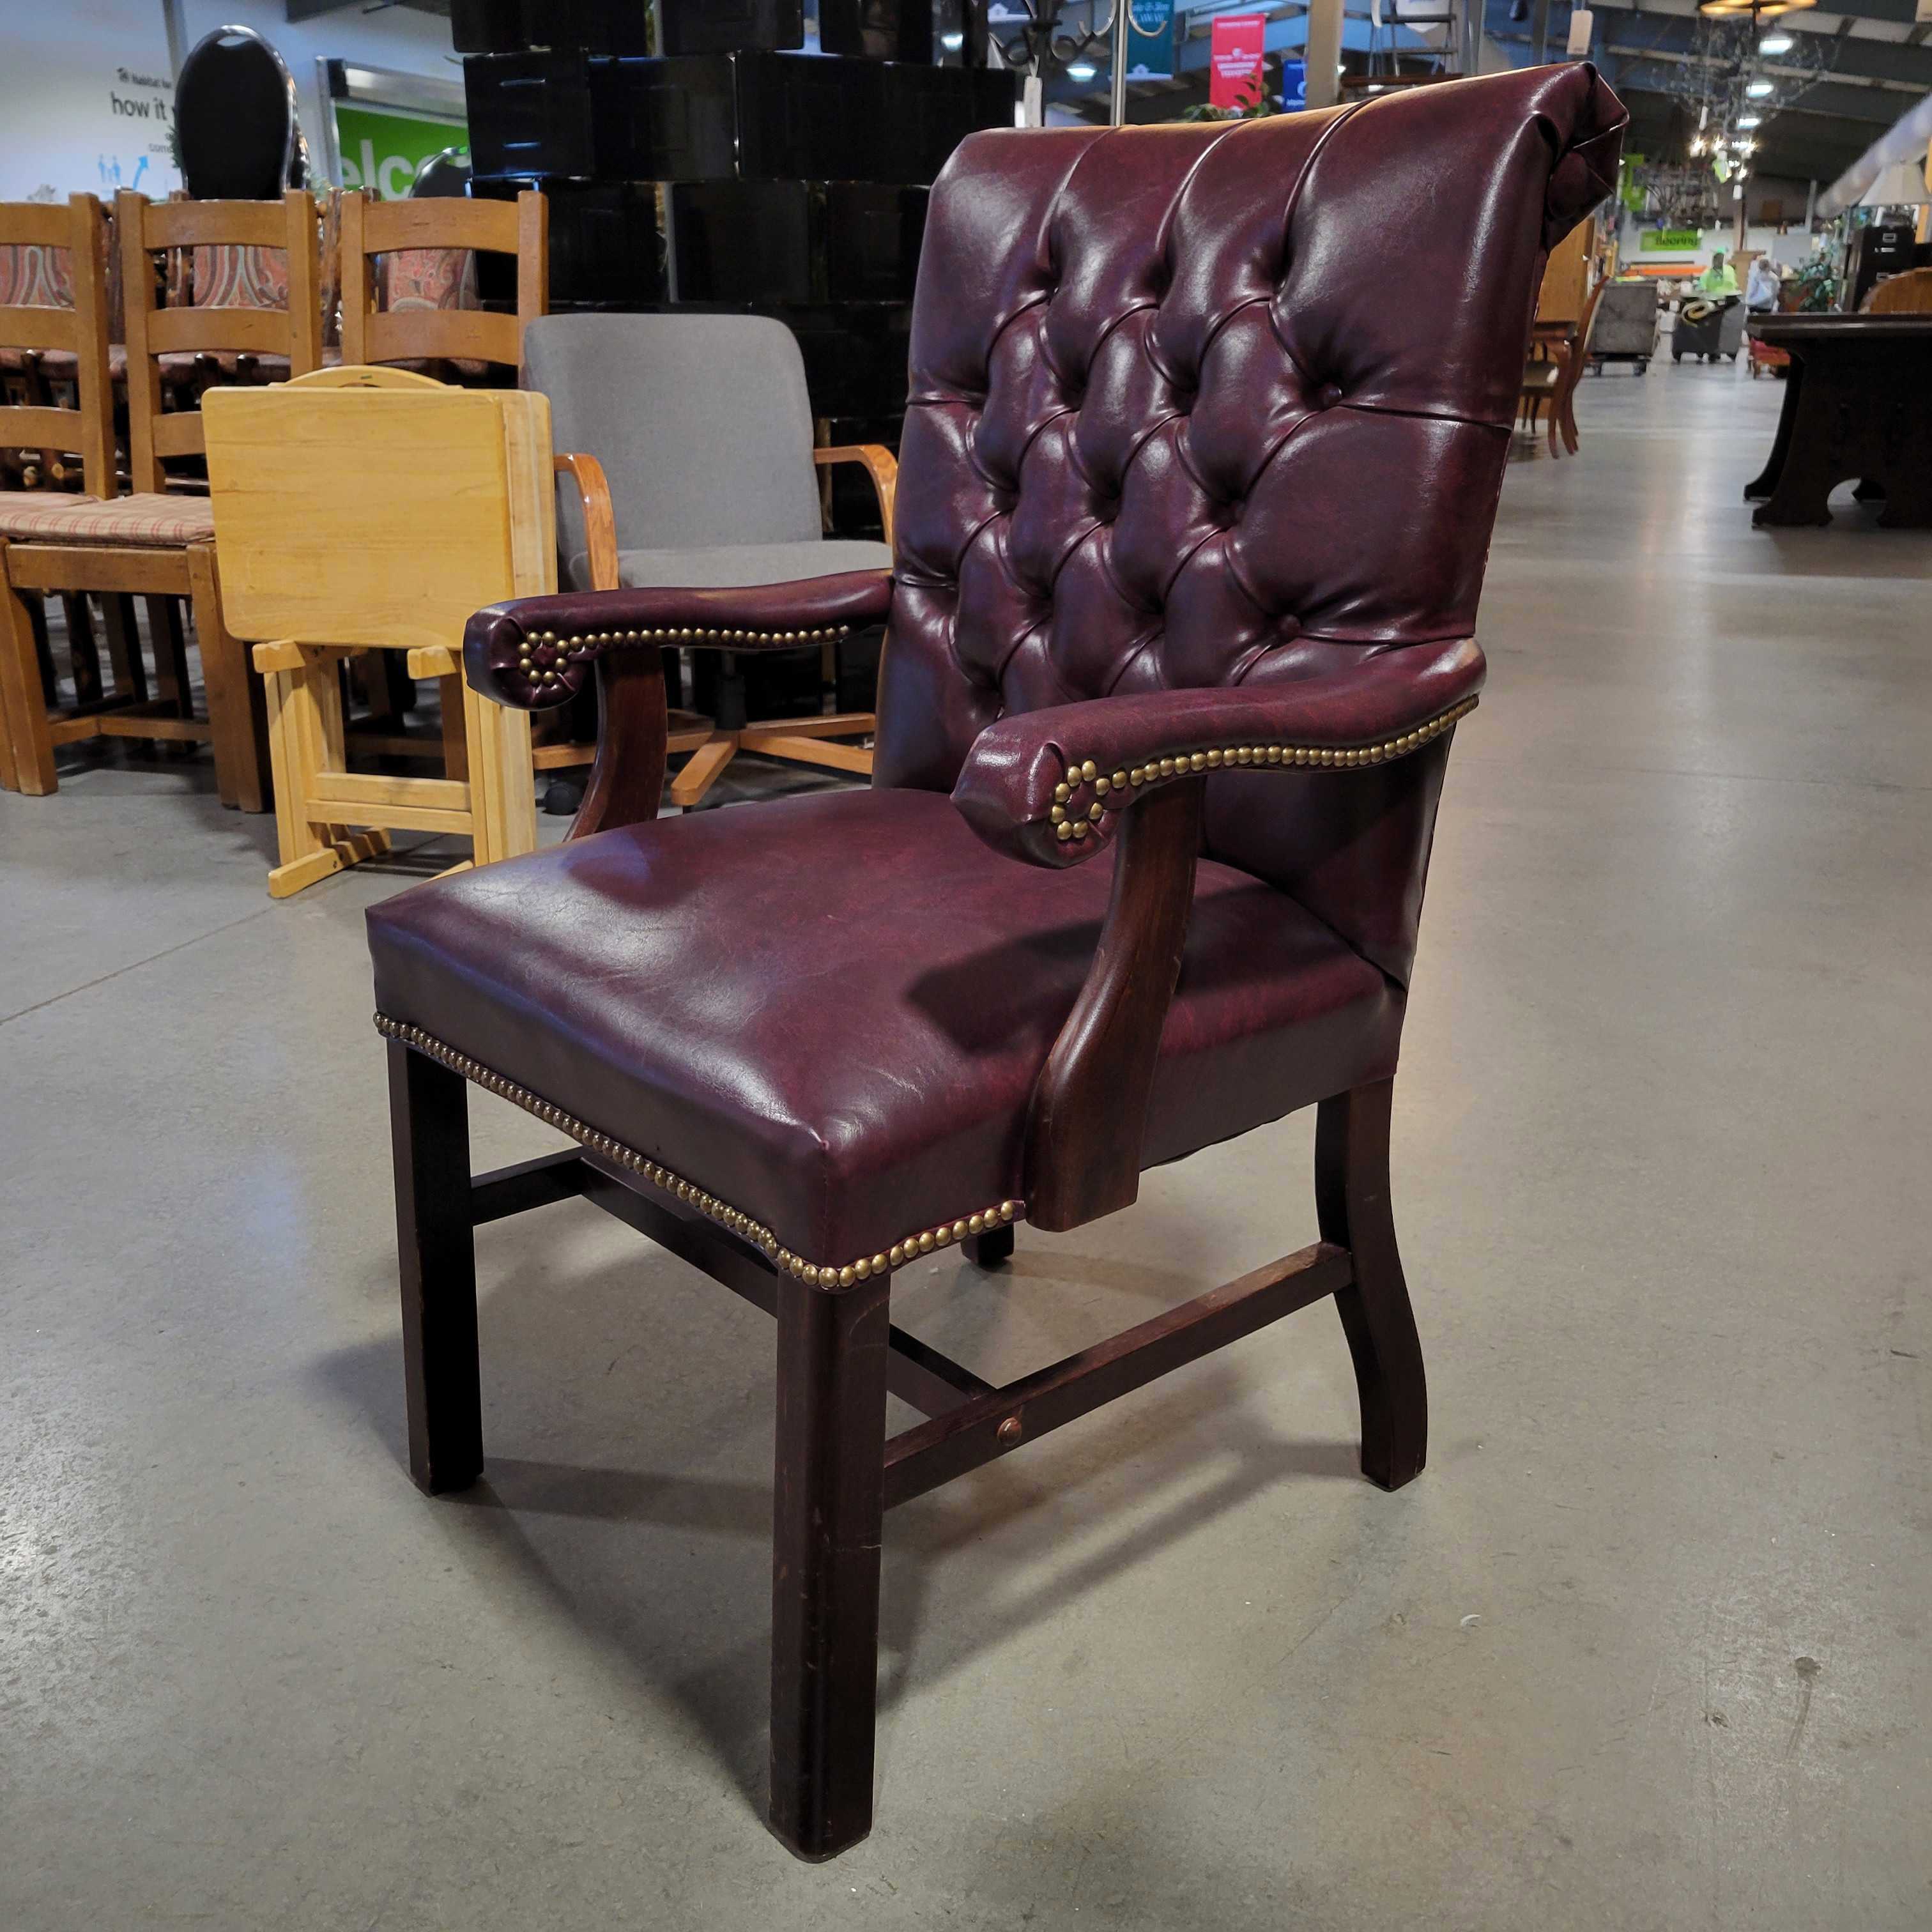 25"x 23"x 39" Burgundy Faux Leather Tufted Nailhead Arm Chair